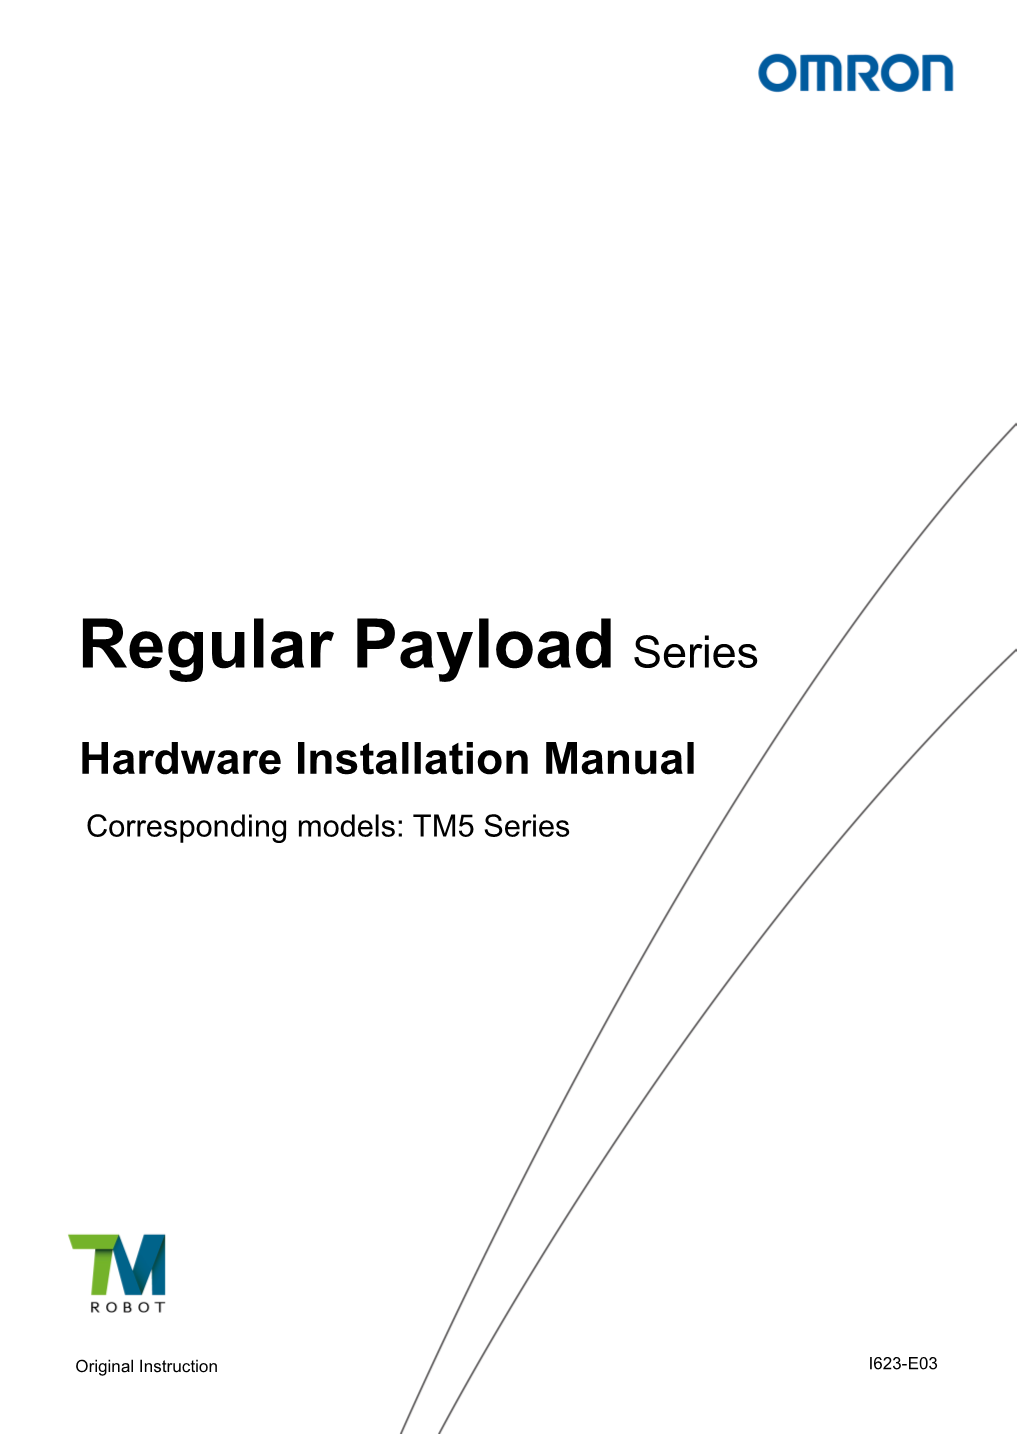 TM5 Hardware Installation Manual